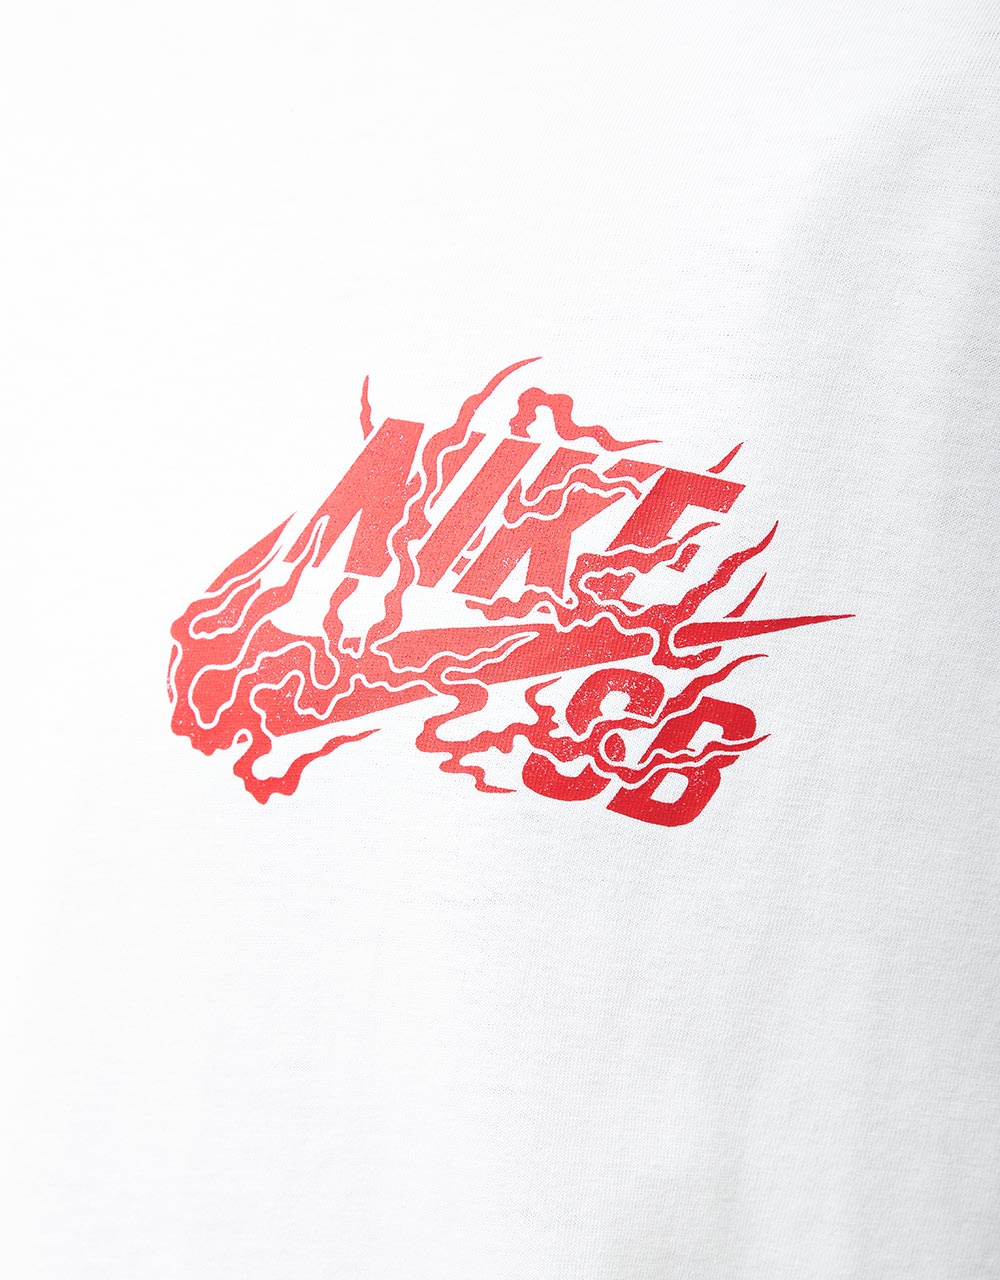 Nike SB Dragon T-Shirt - White/University Red